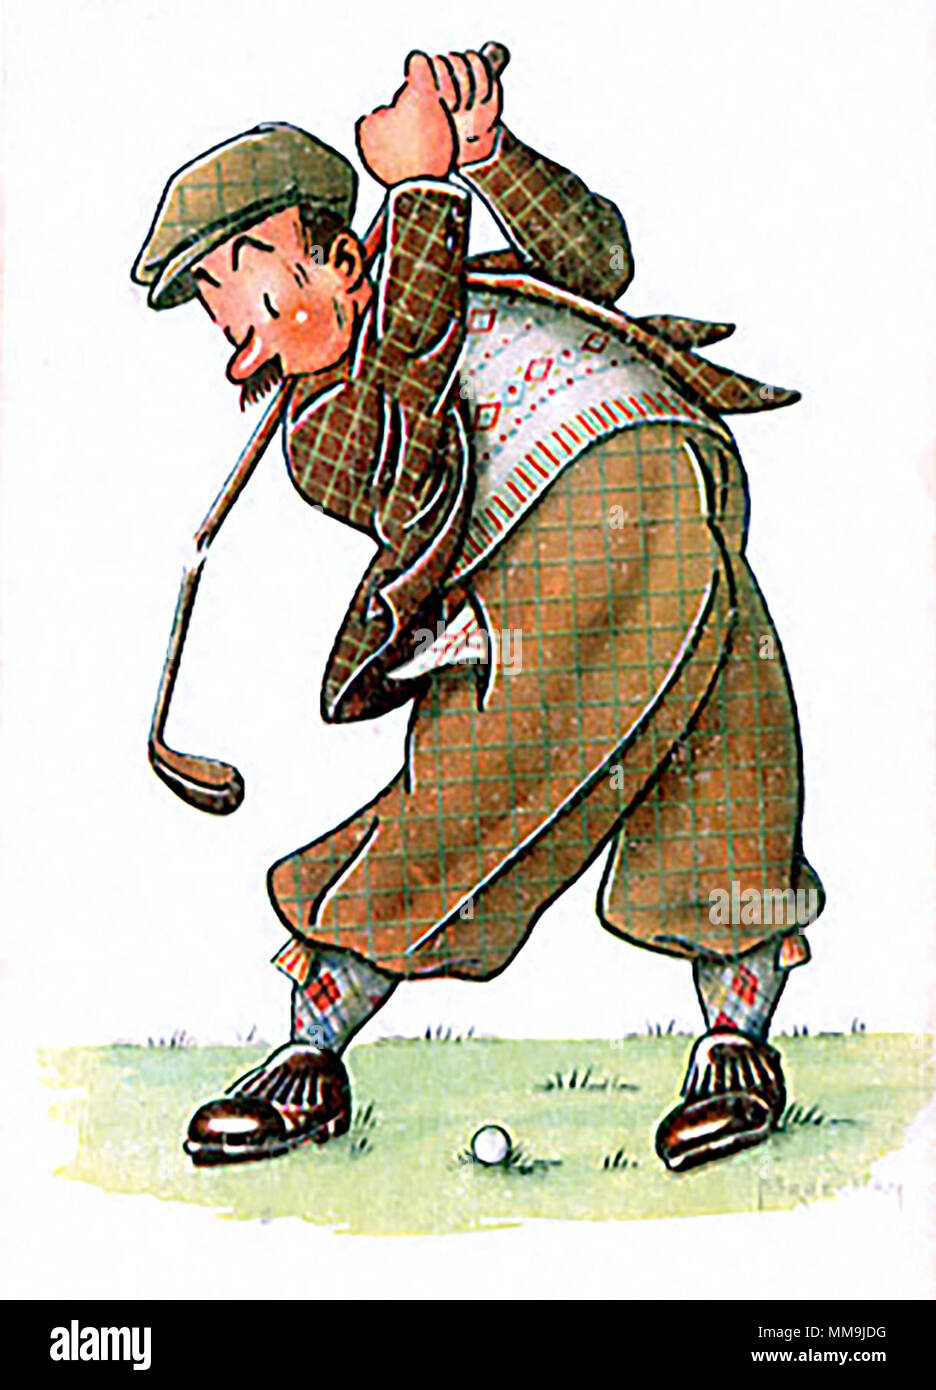 Golfer taking backswing with broken club Stock Photo